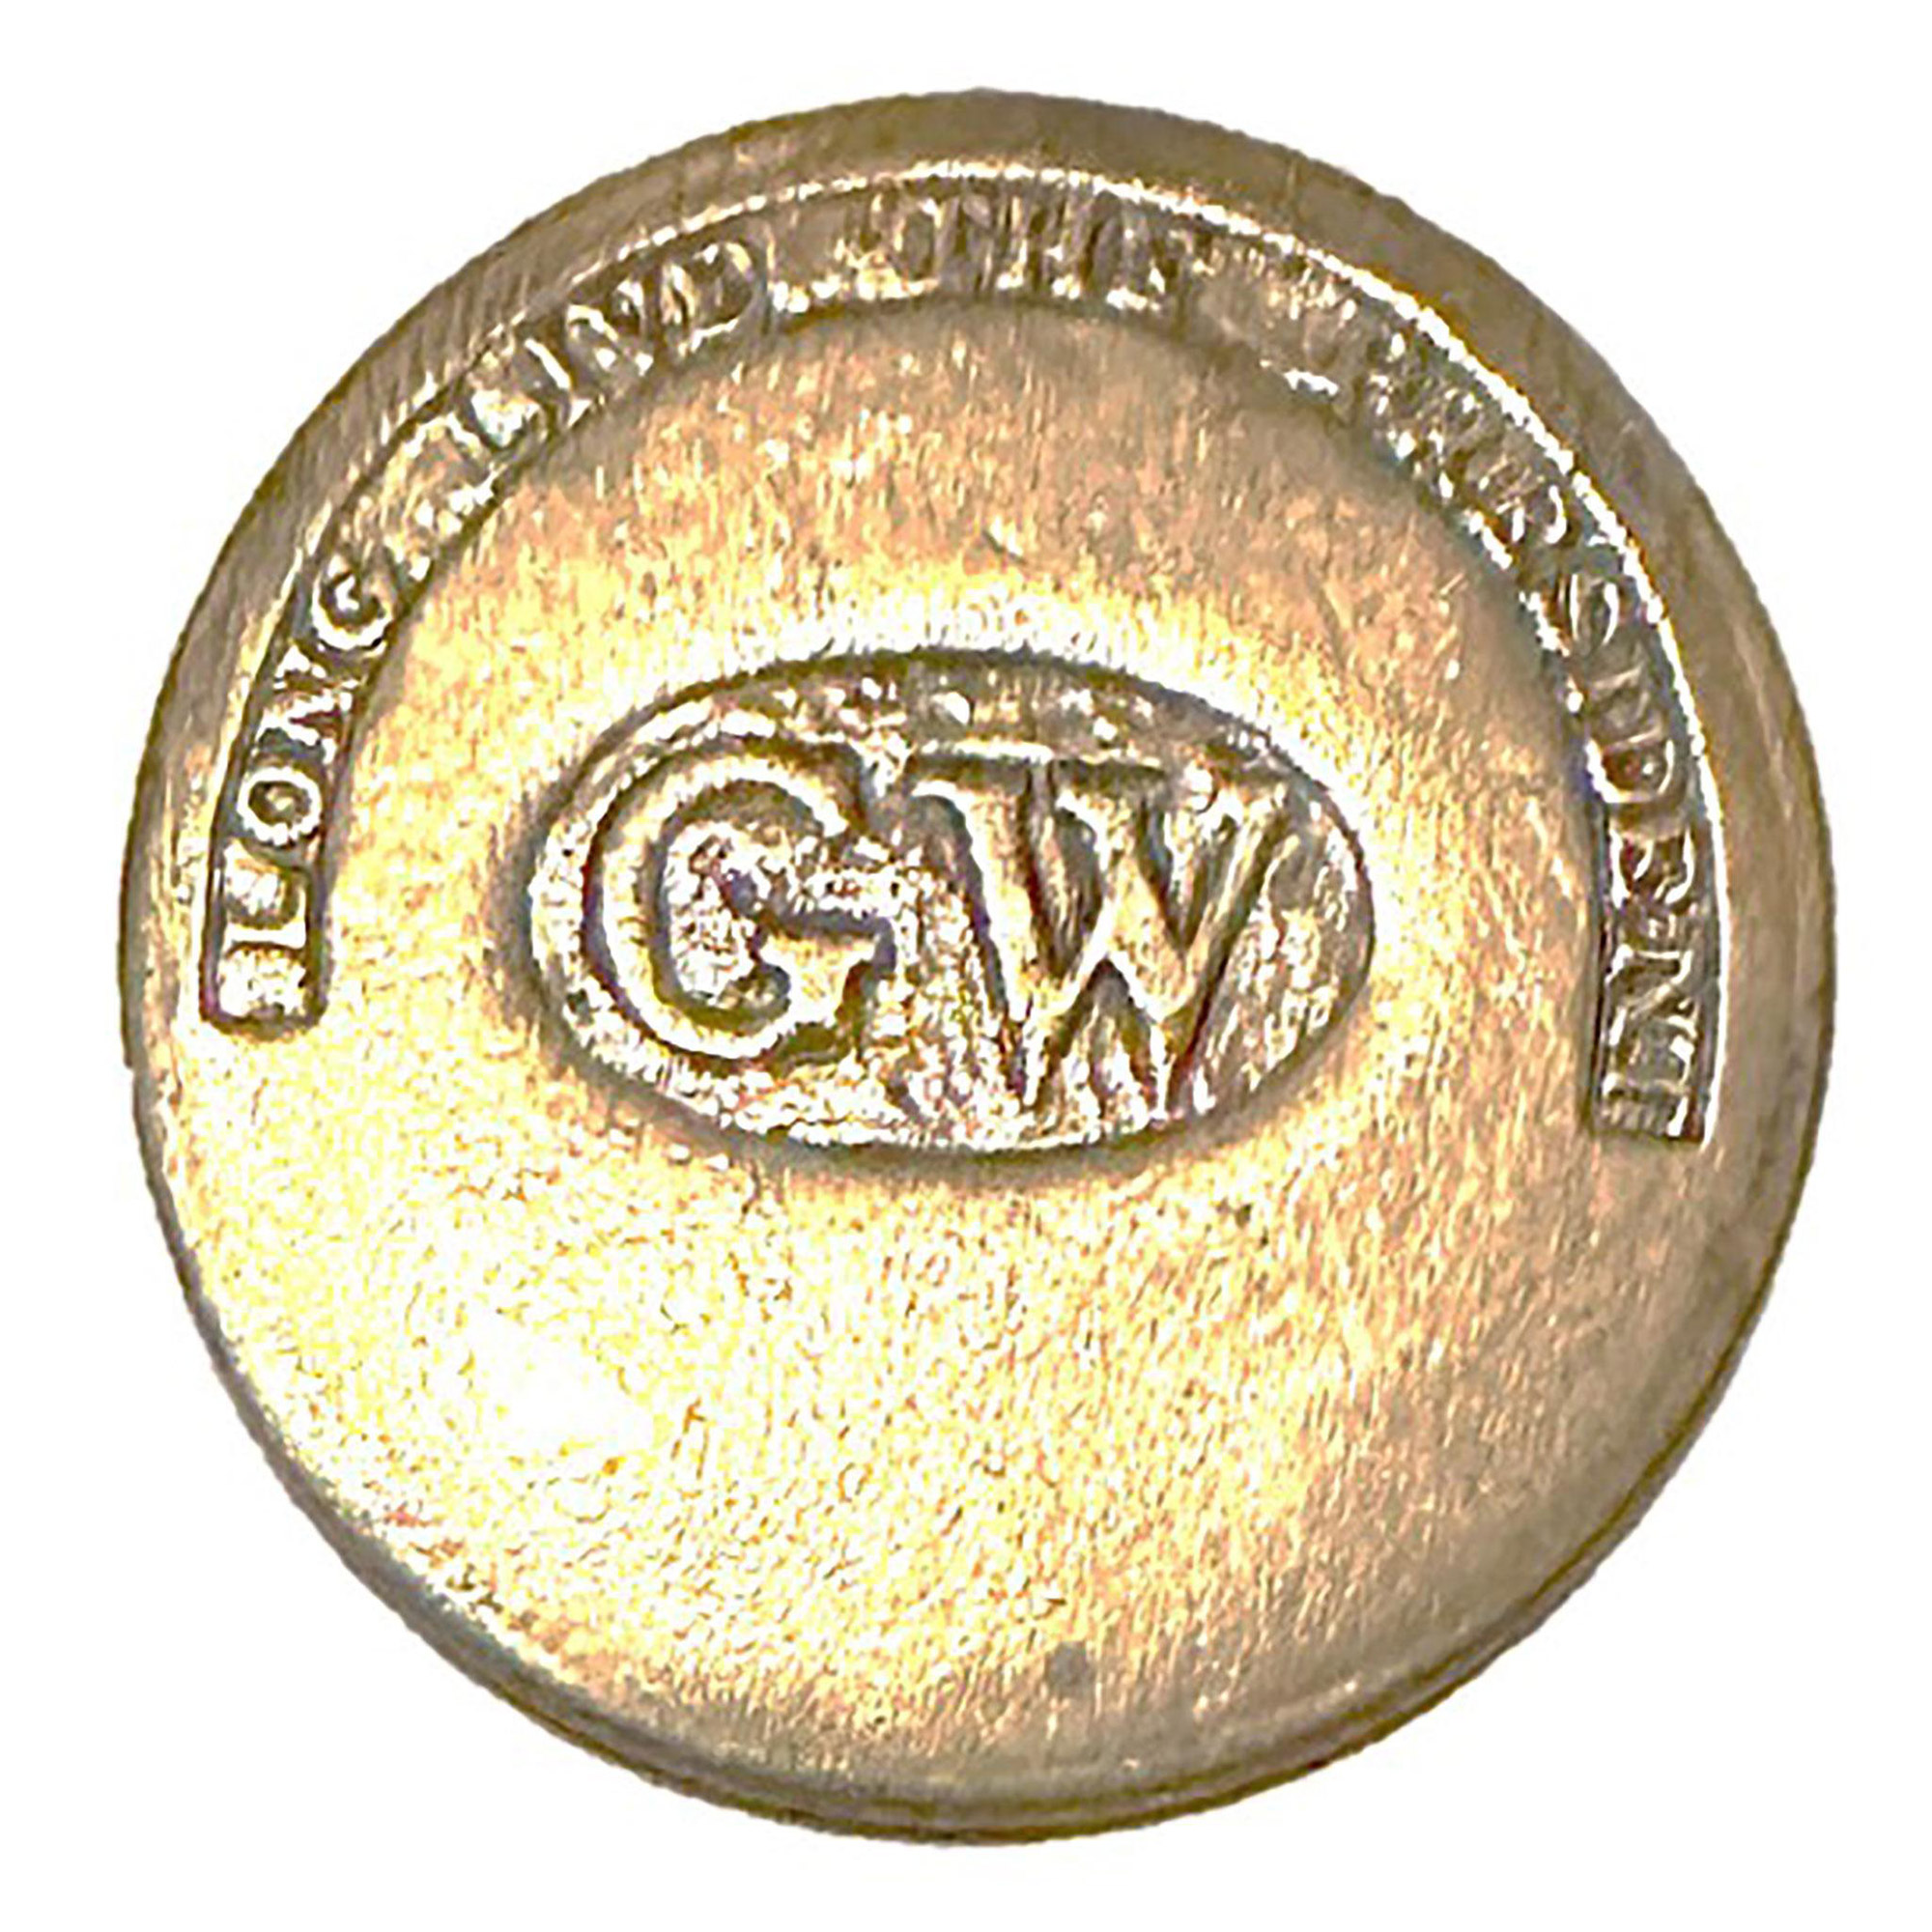 A set of Div. Three G. Washington Inaugural buttons - Image 5 of 6